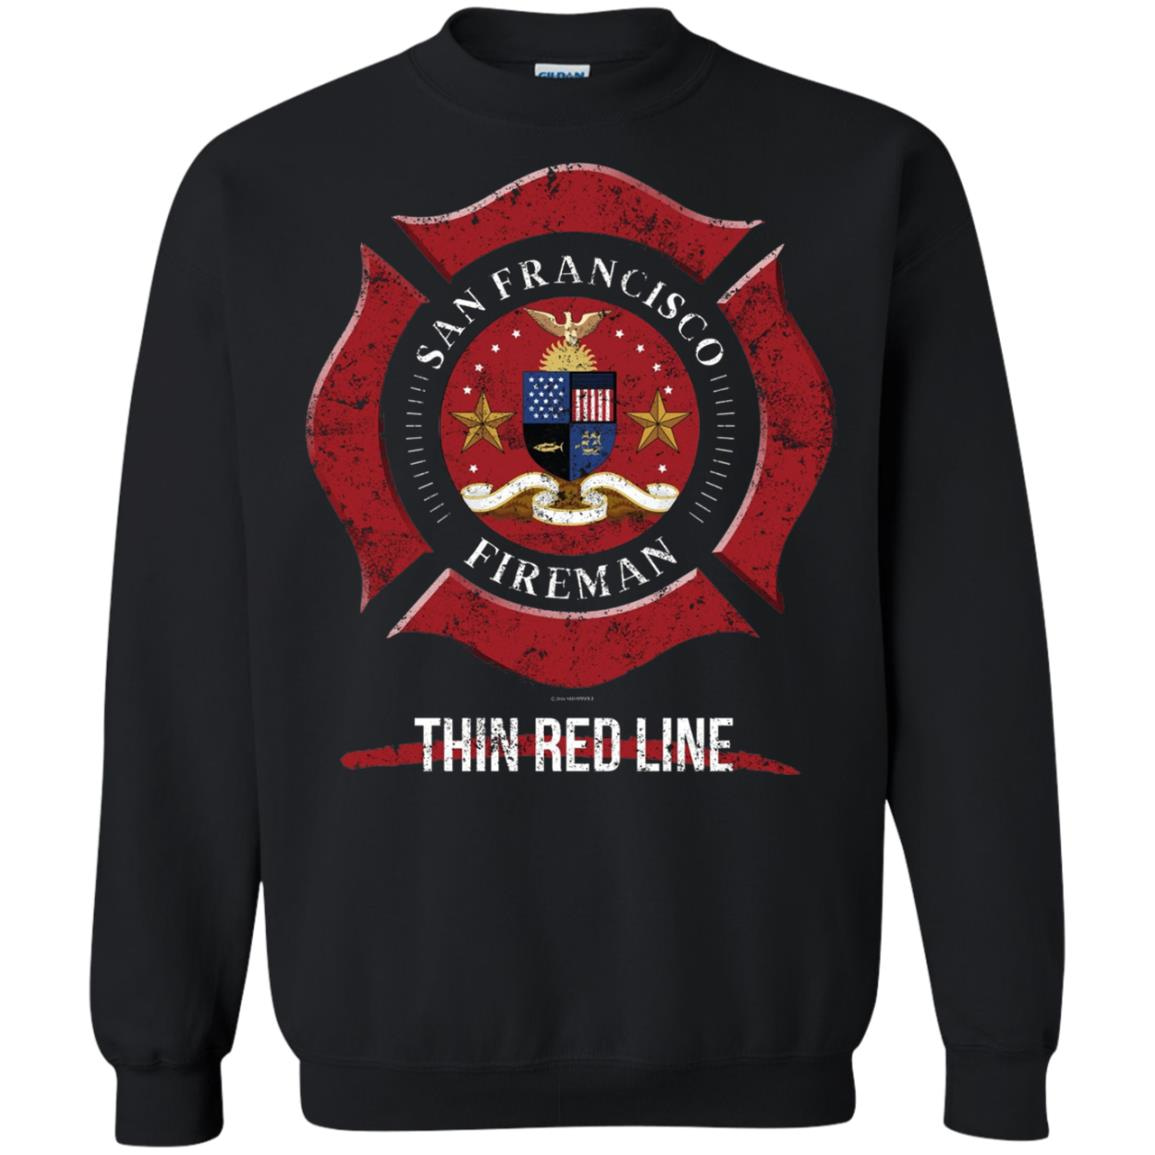 Inktee Store - San Francisco California San Francisco Firefighter Sweatshirt Image